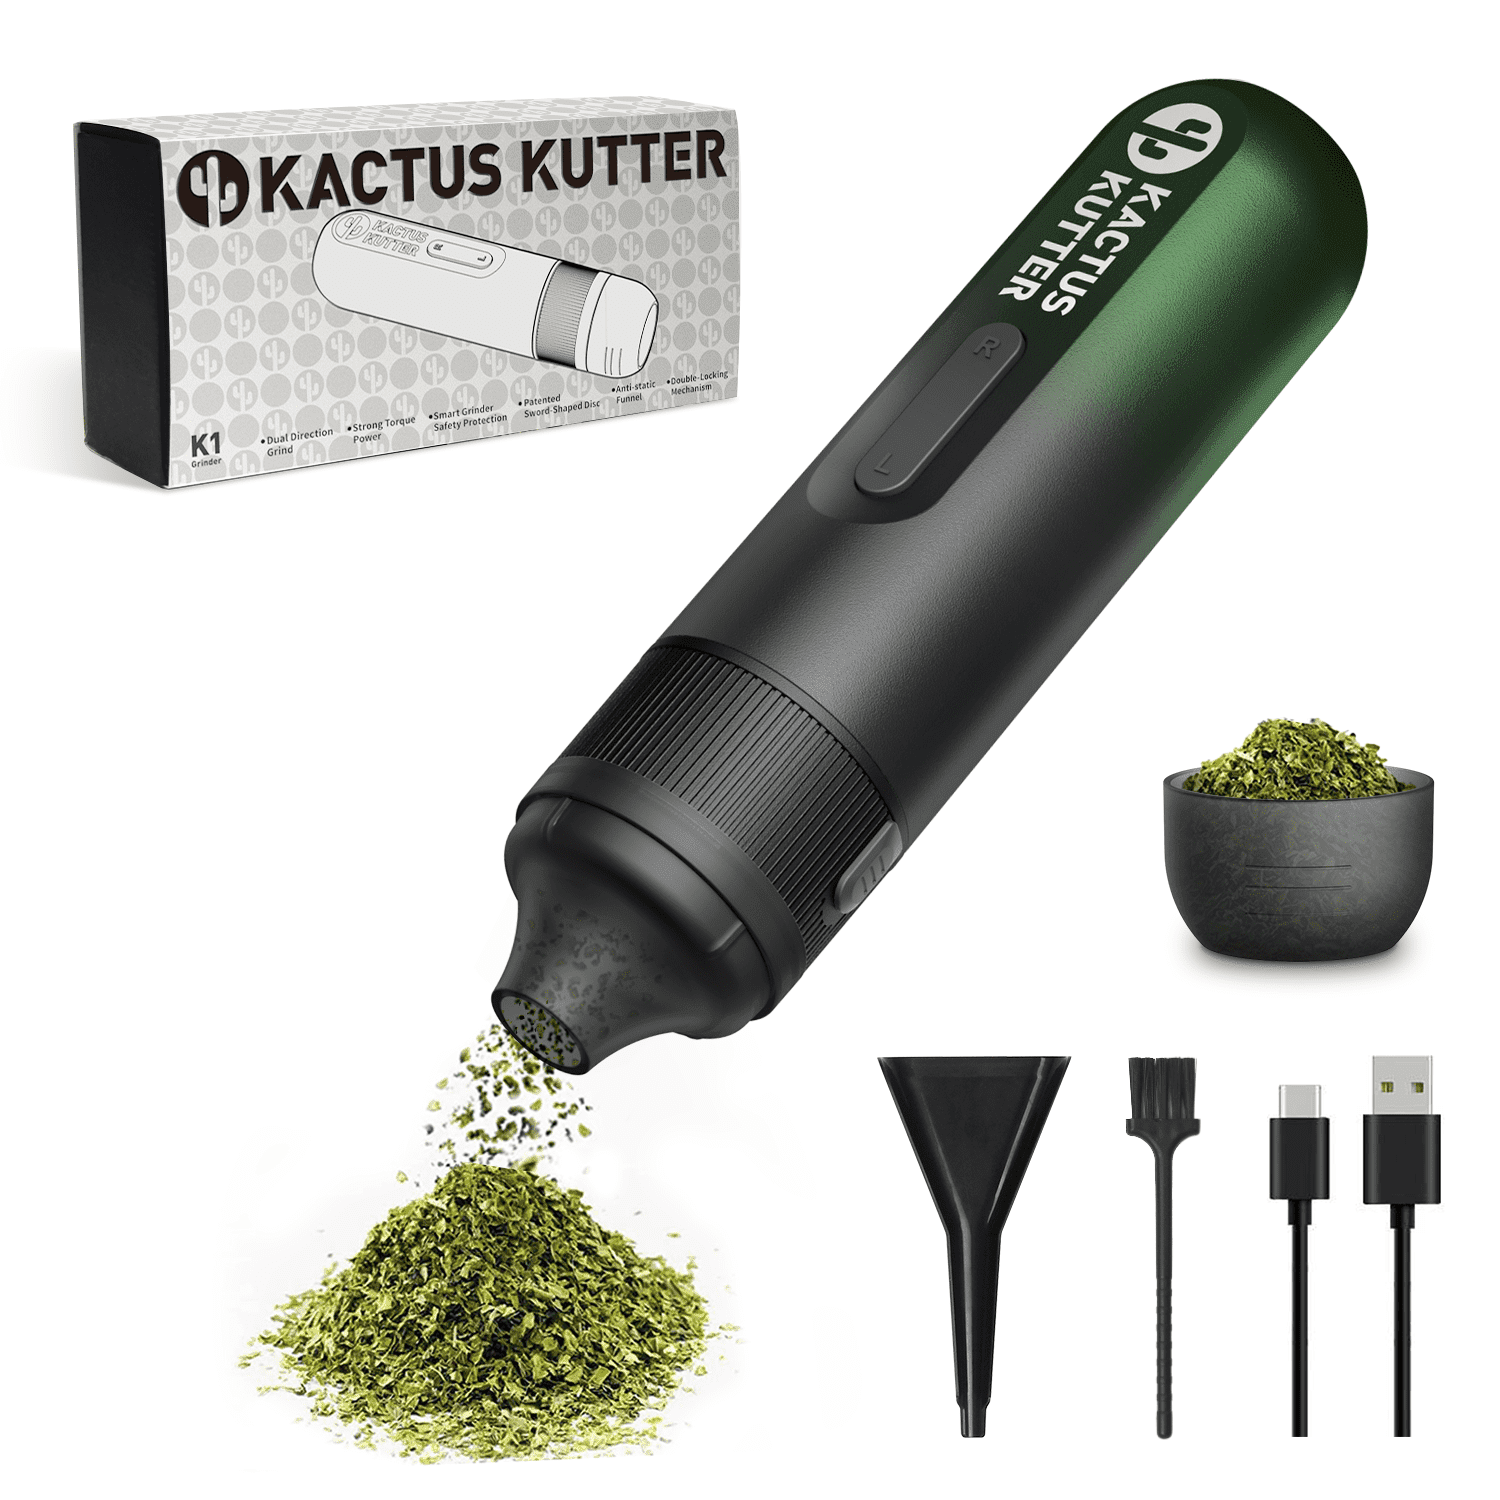 KactusKutter K1 Electric Herb Grinder Battery Powered Automatic Portable Herb Grinder